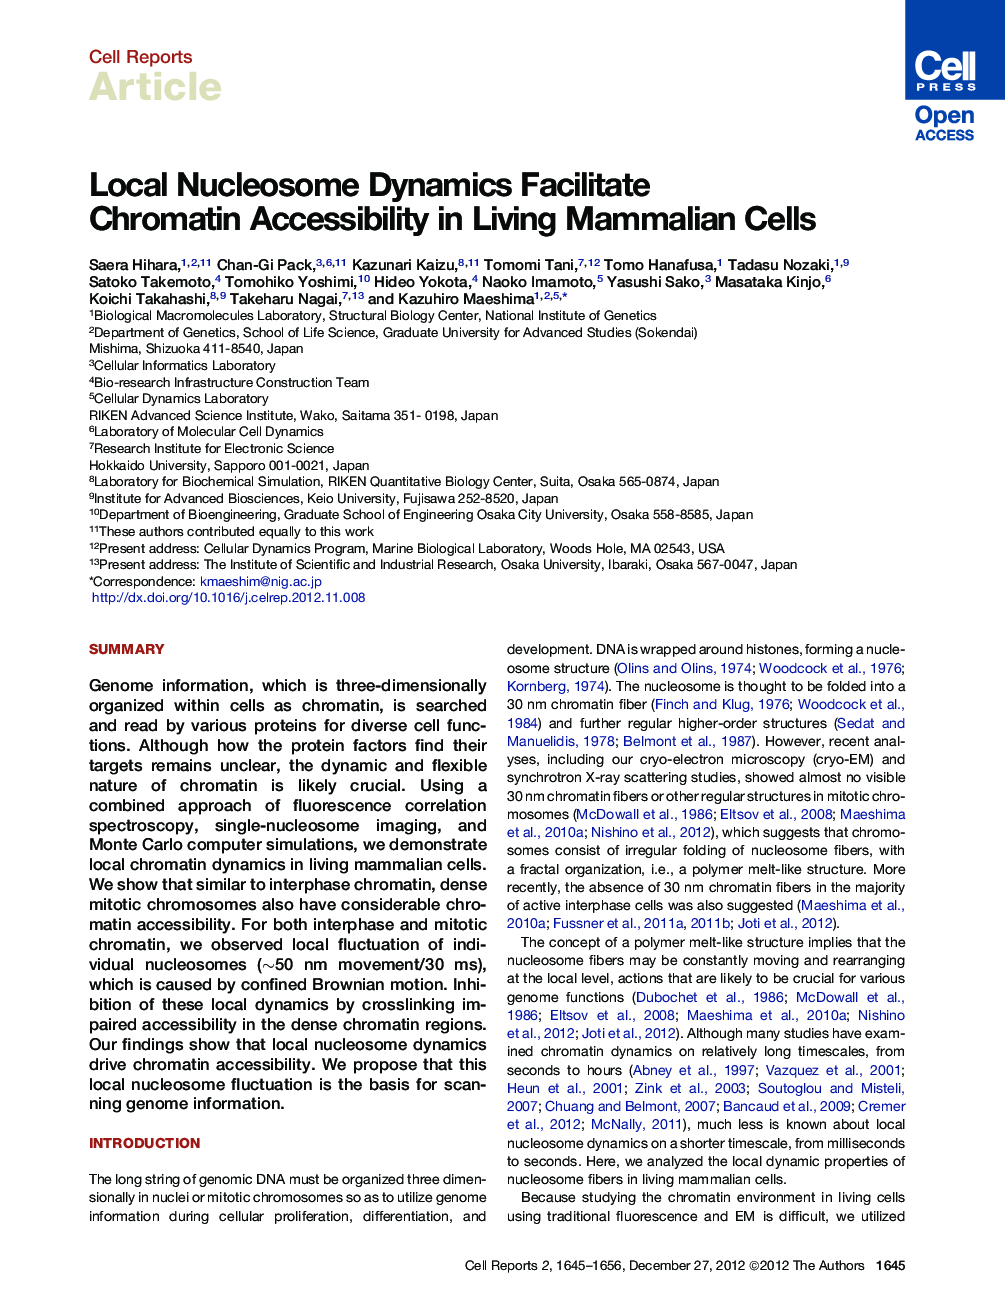 Local Nucleosome Dynamics Facilitate Chromatin Accessibility in Living Mammalian Cells